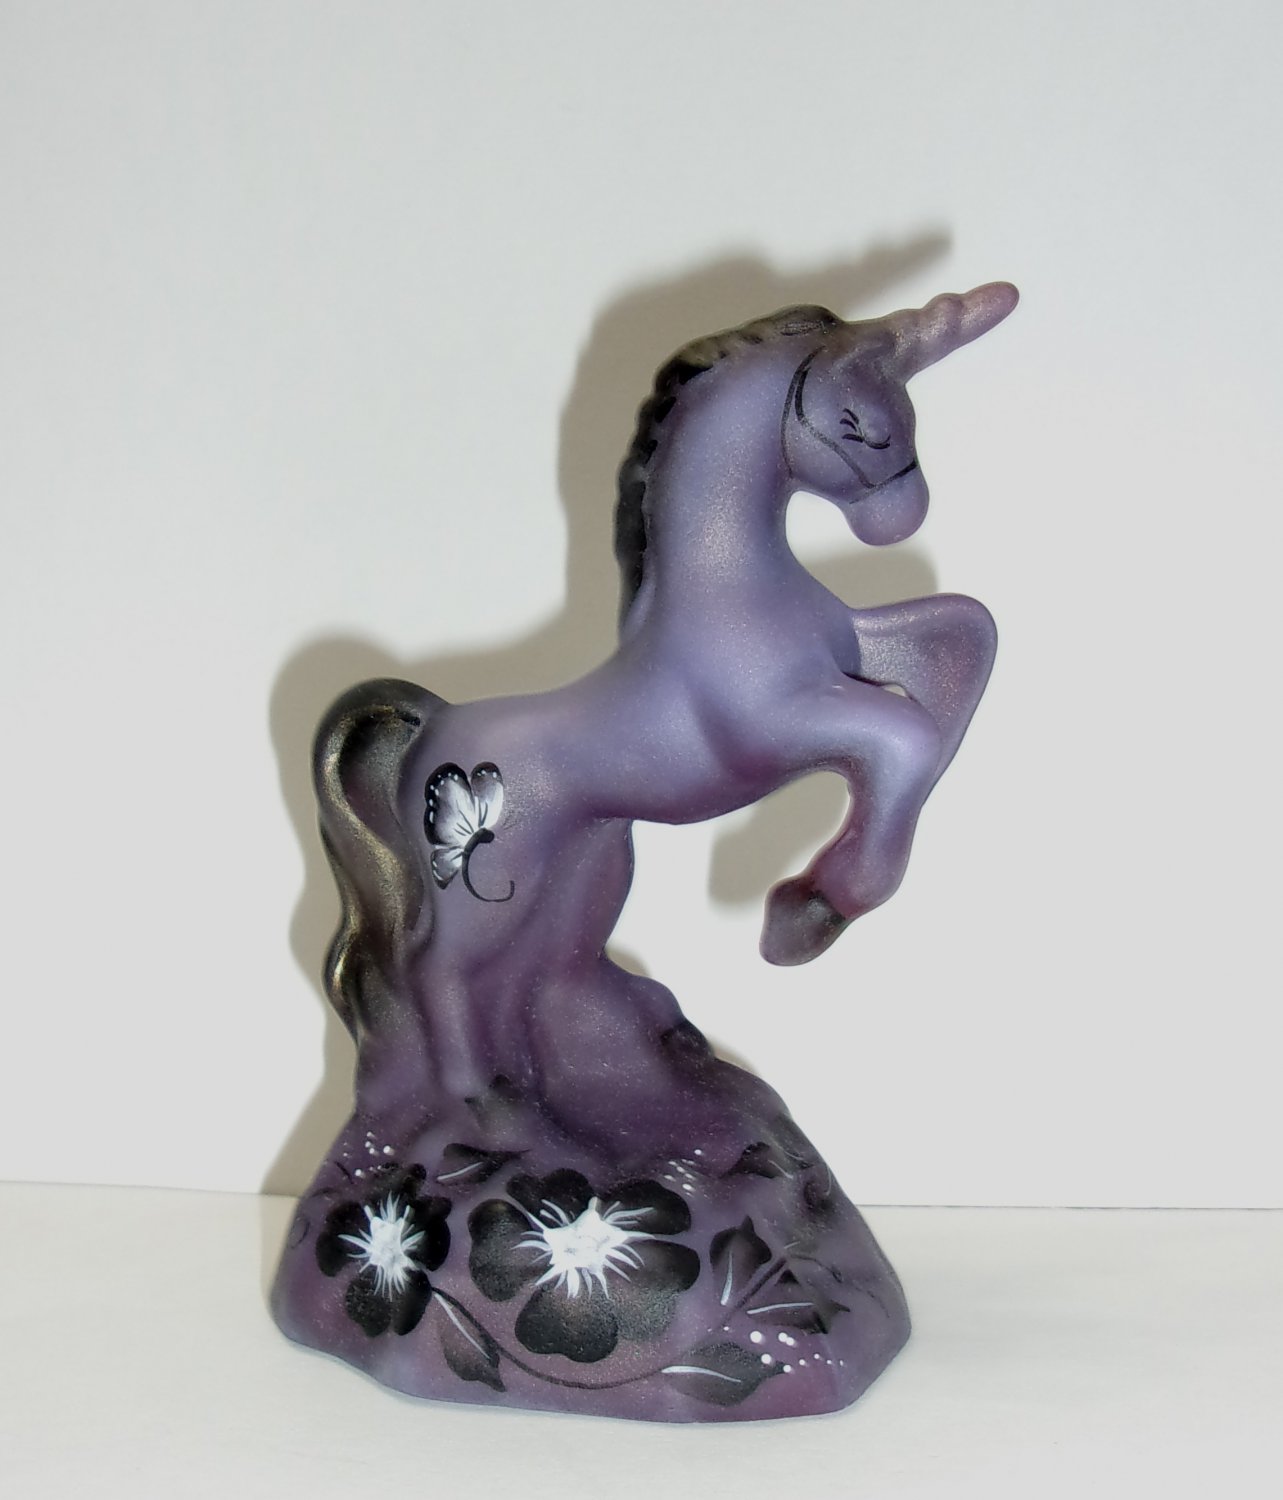 Fenton Glass Purple Satin Butterfly Noir Unicorn Figurine Ltd Ed #6/38 M Kibbe